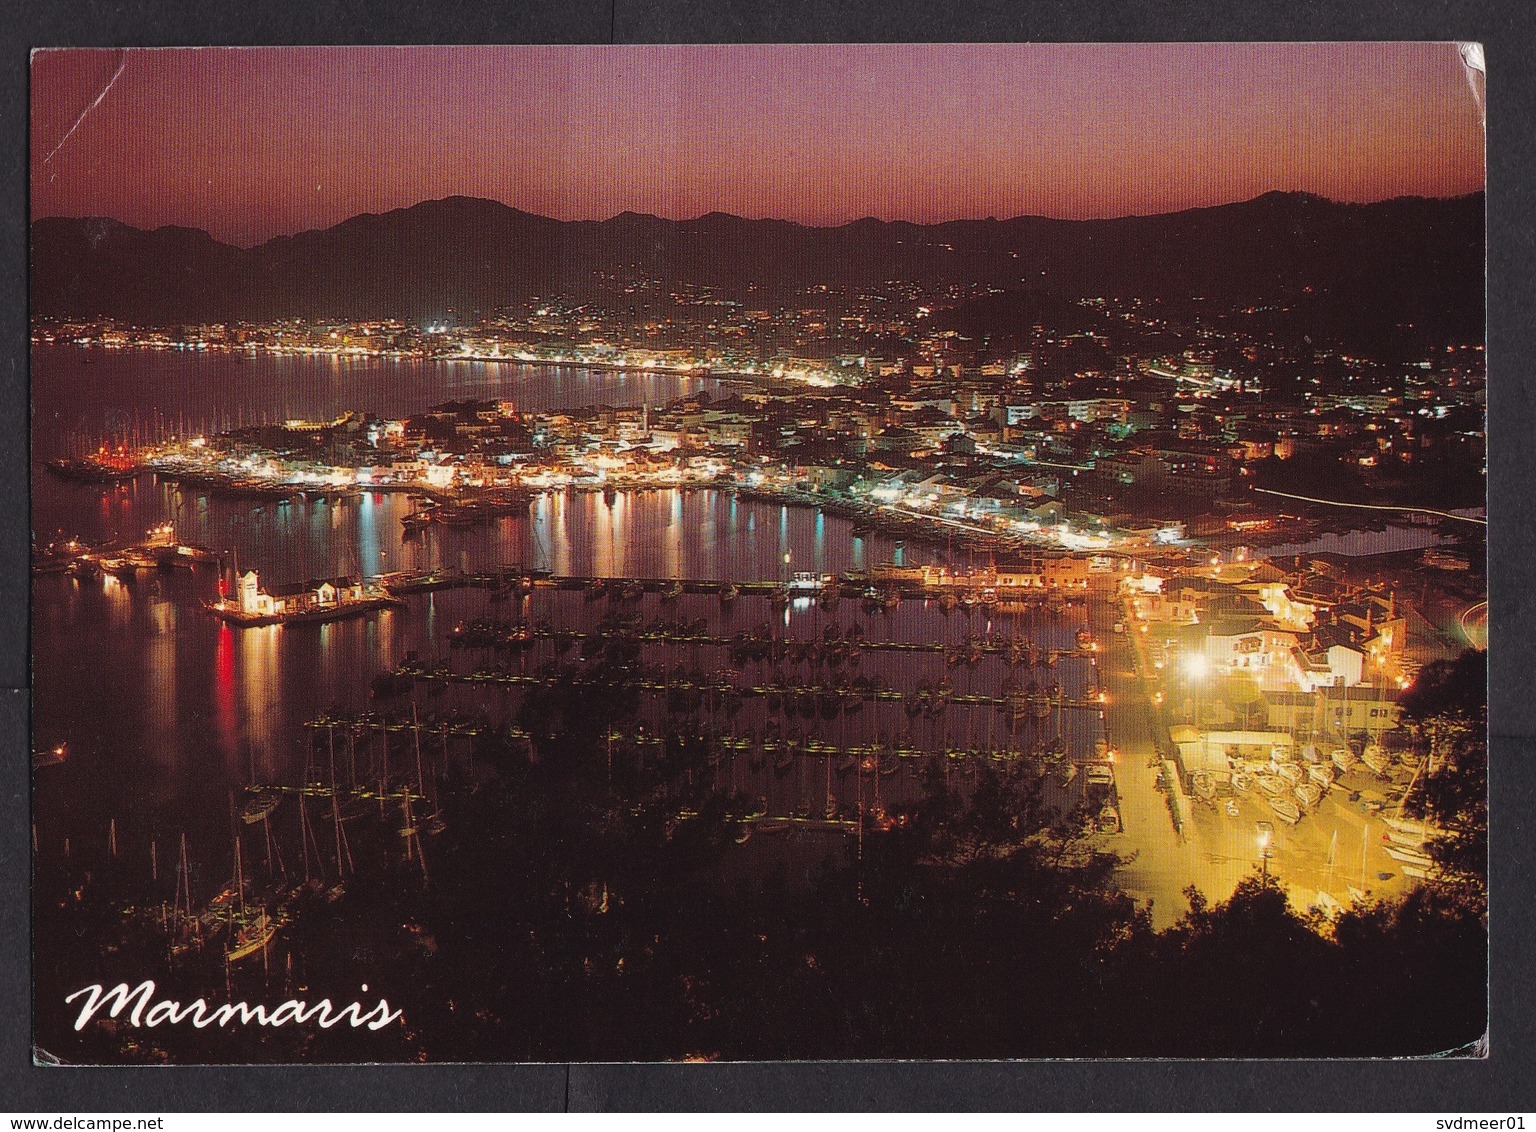 Turkey: Picture Postcard Marmaris To Netherlands, 1990s, 2 Stamps, Bird, City View, Inflation: 225,000.- (minor Damage) - Briefe U. Dokumente